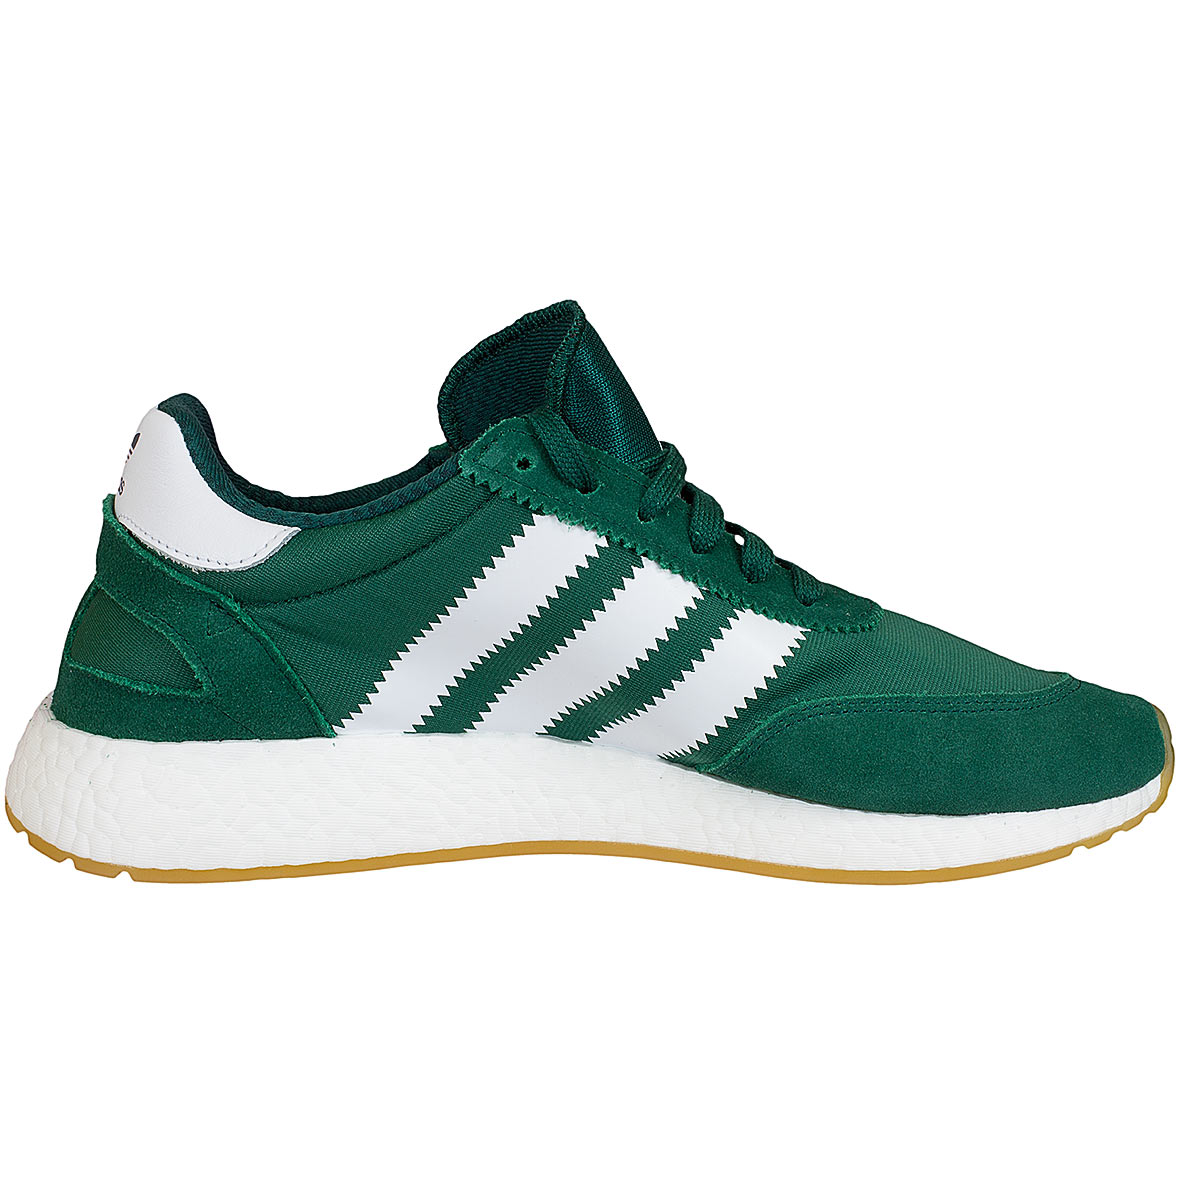 ☆ Adidas Originals Sneaker Iniki Runner grün/weiß - hier bestellen!